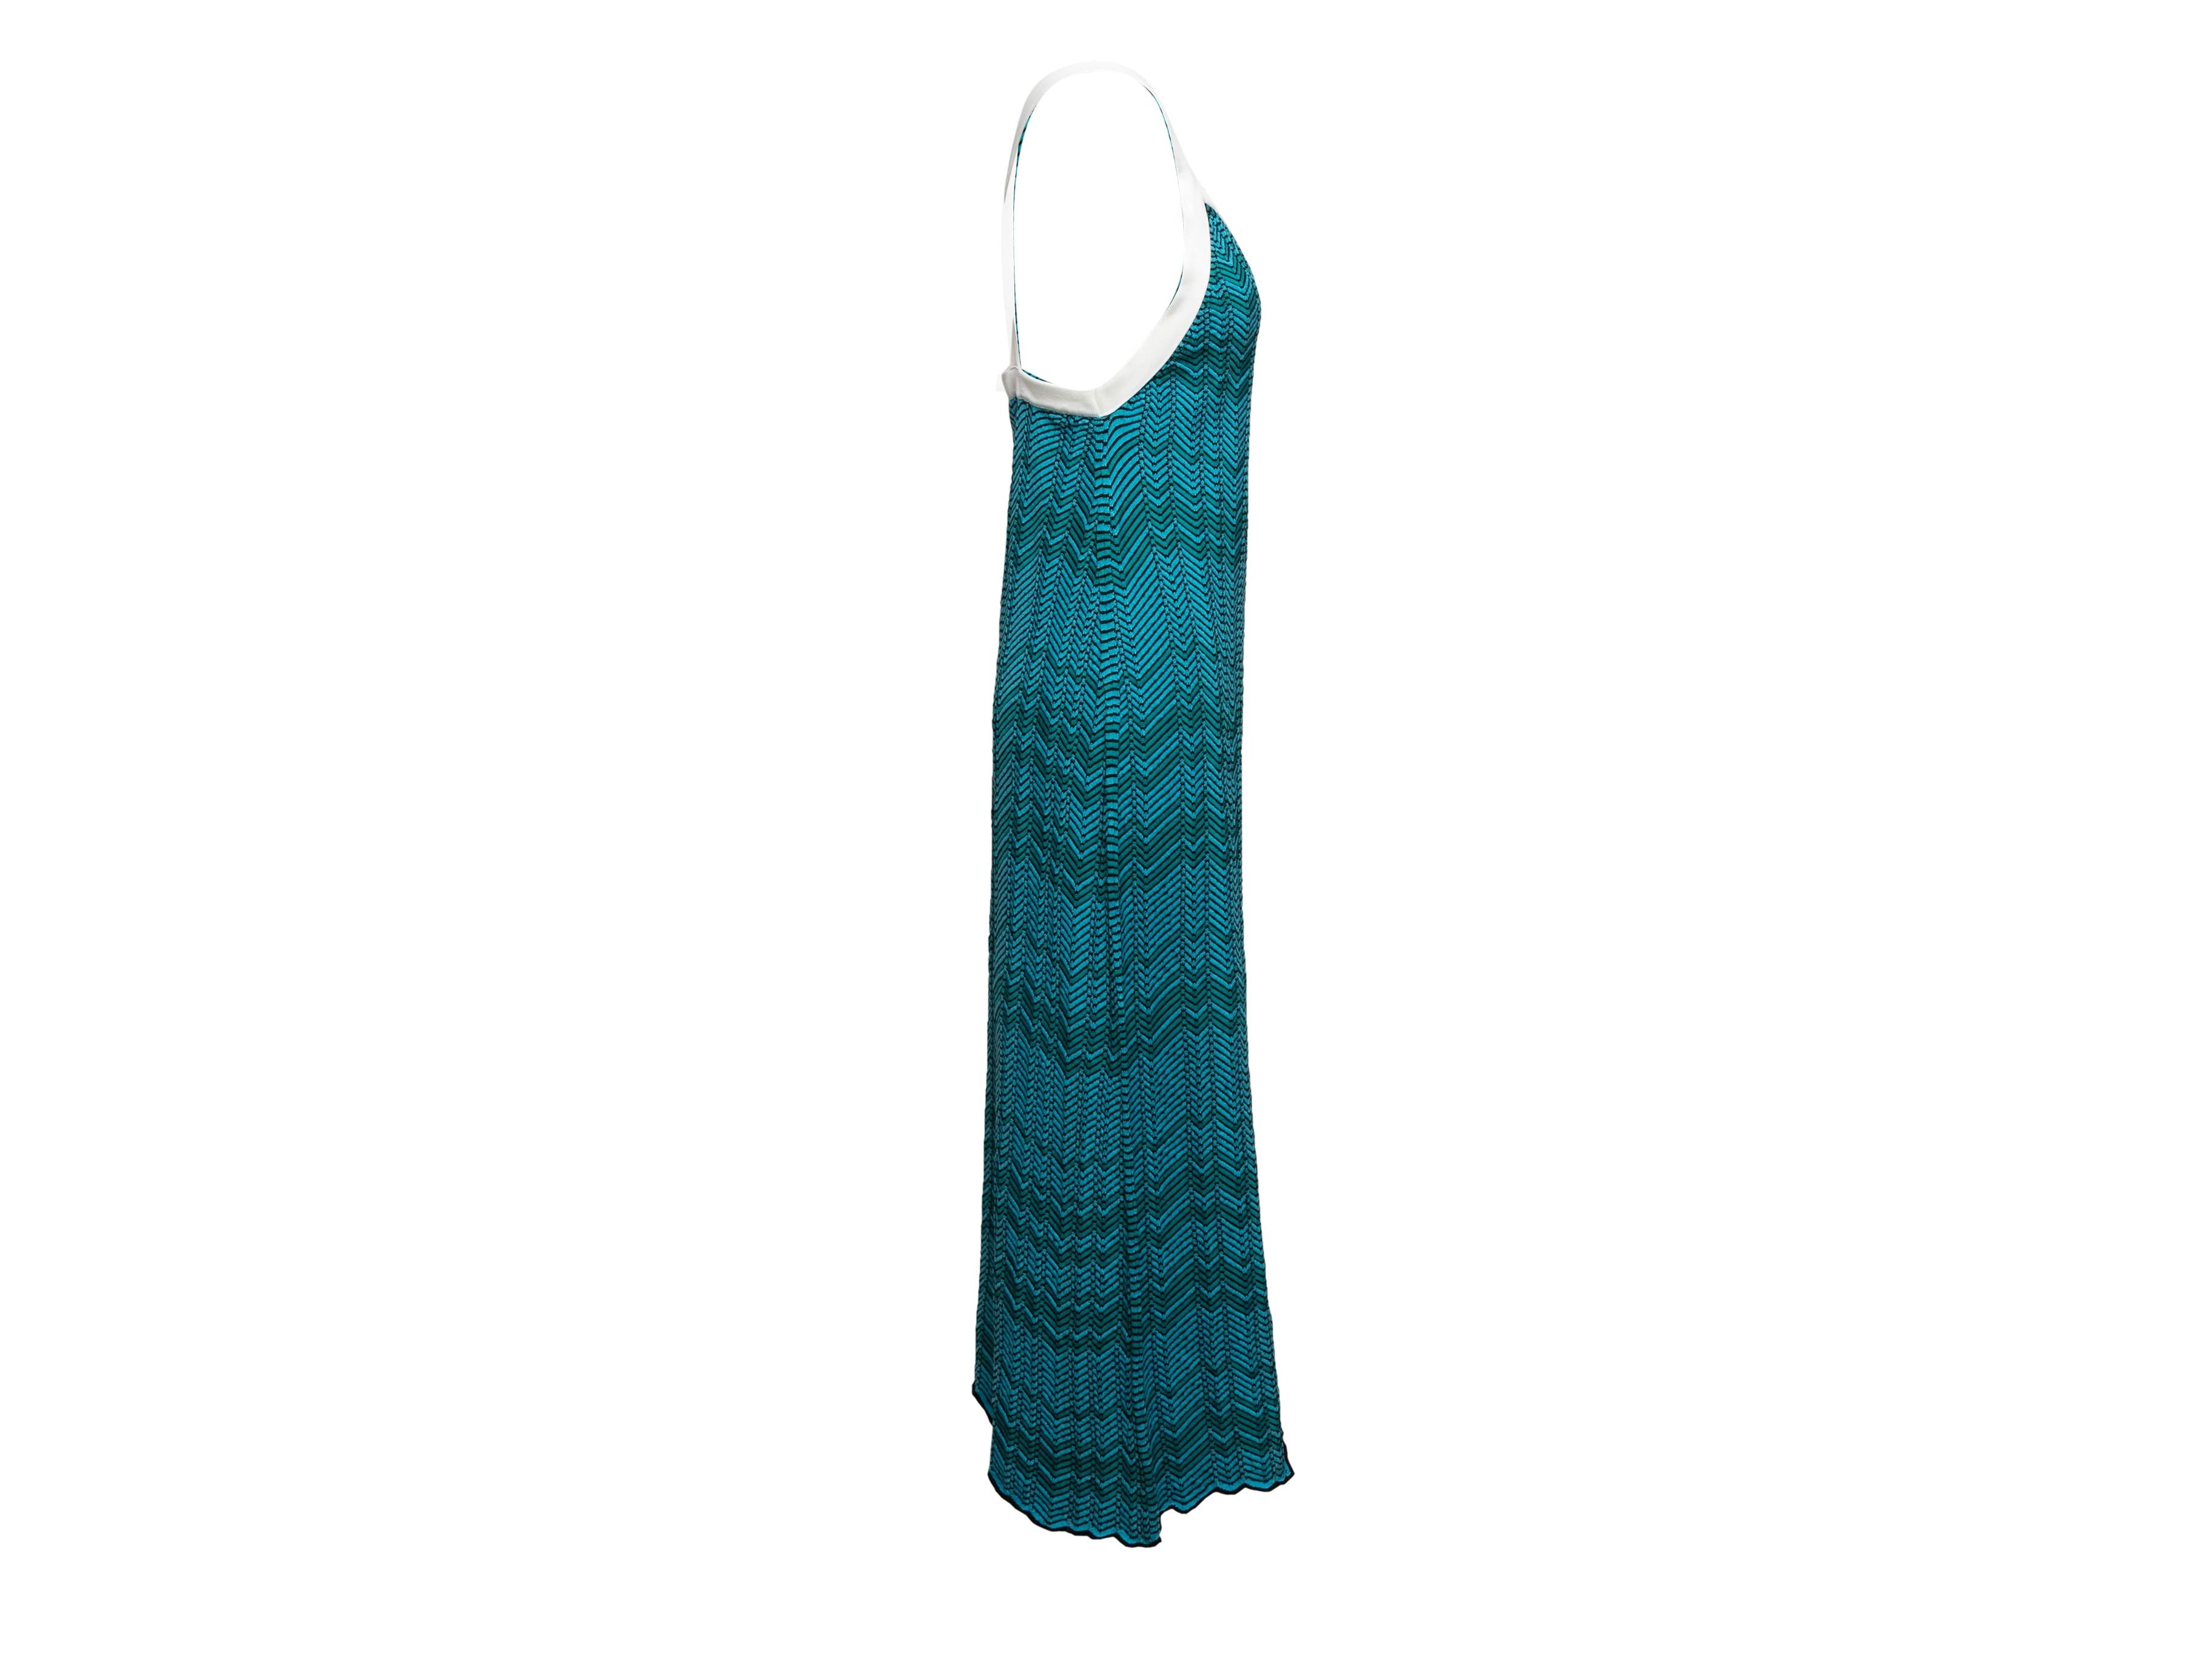 Teal, black, and white virgin wool-blend chevron knit sleeveless maxi dress by Wales Bonner. V-neck. 32